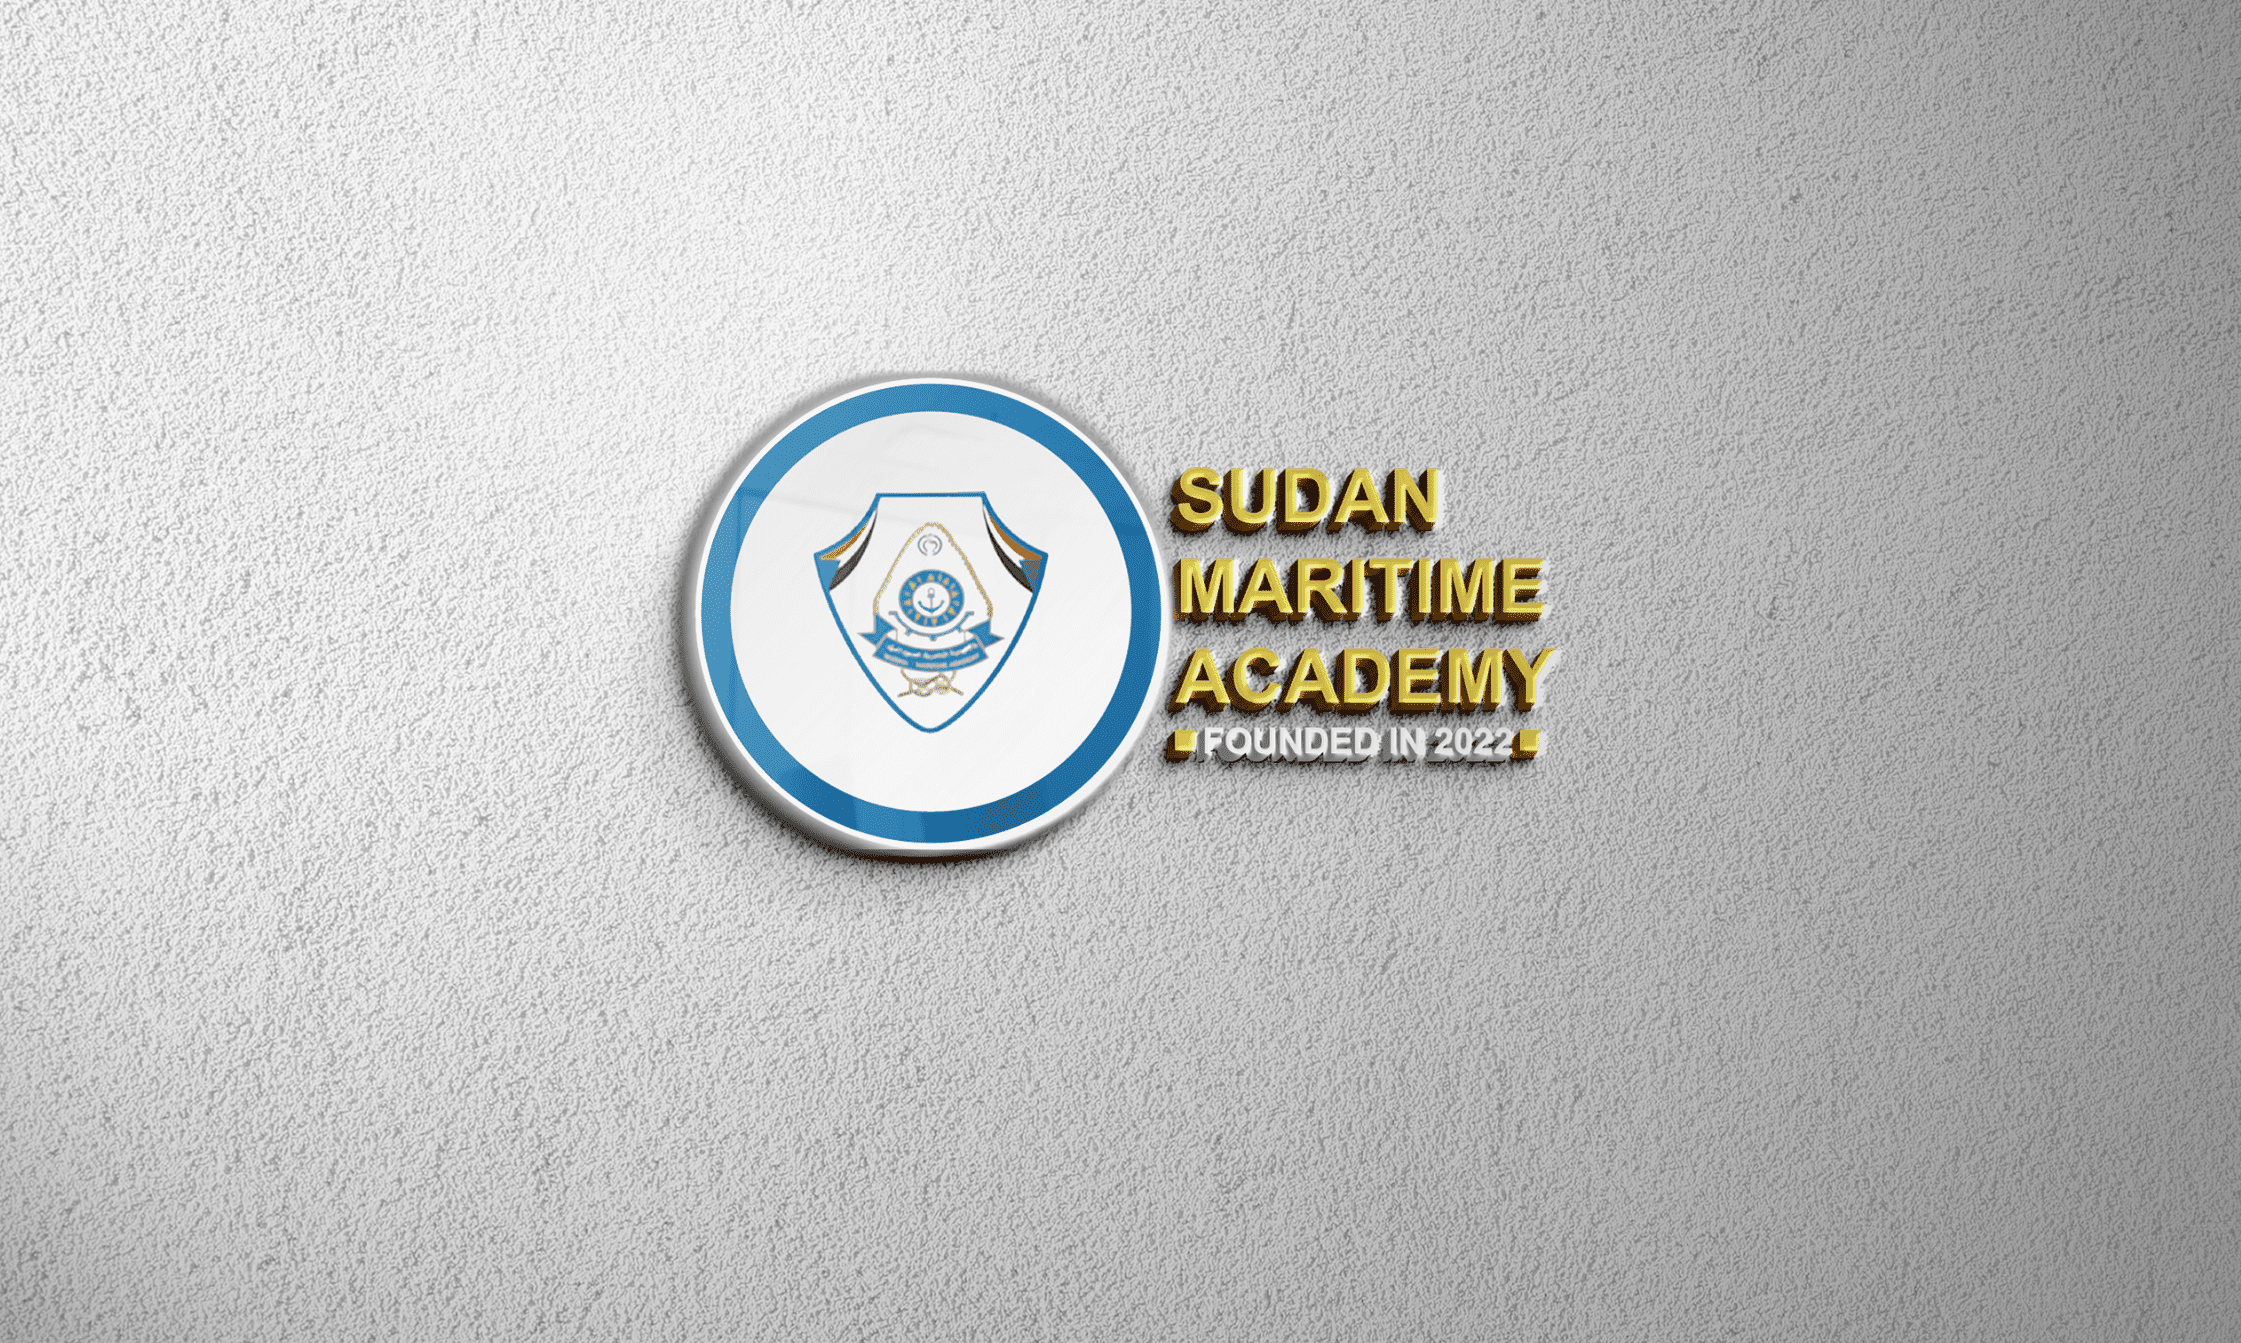 Sudan Maritime Academy Corporate Identity